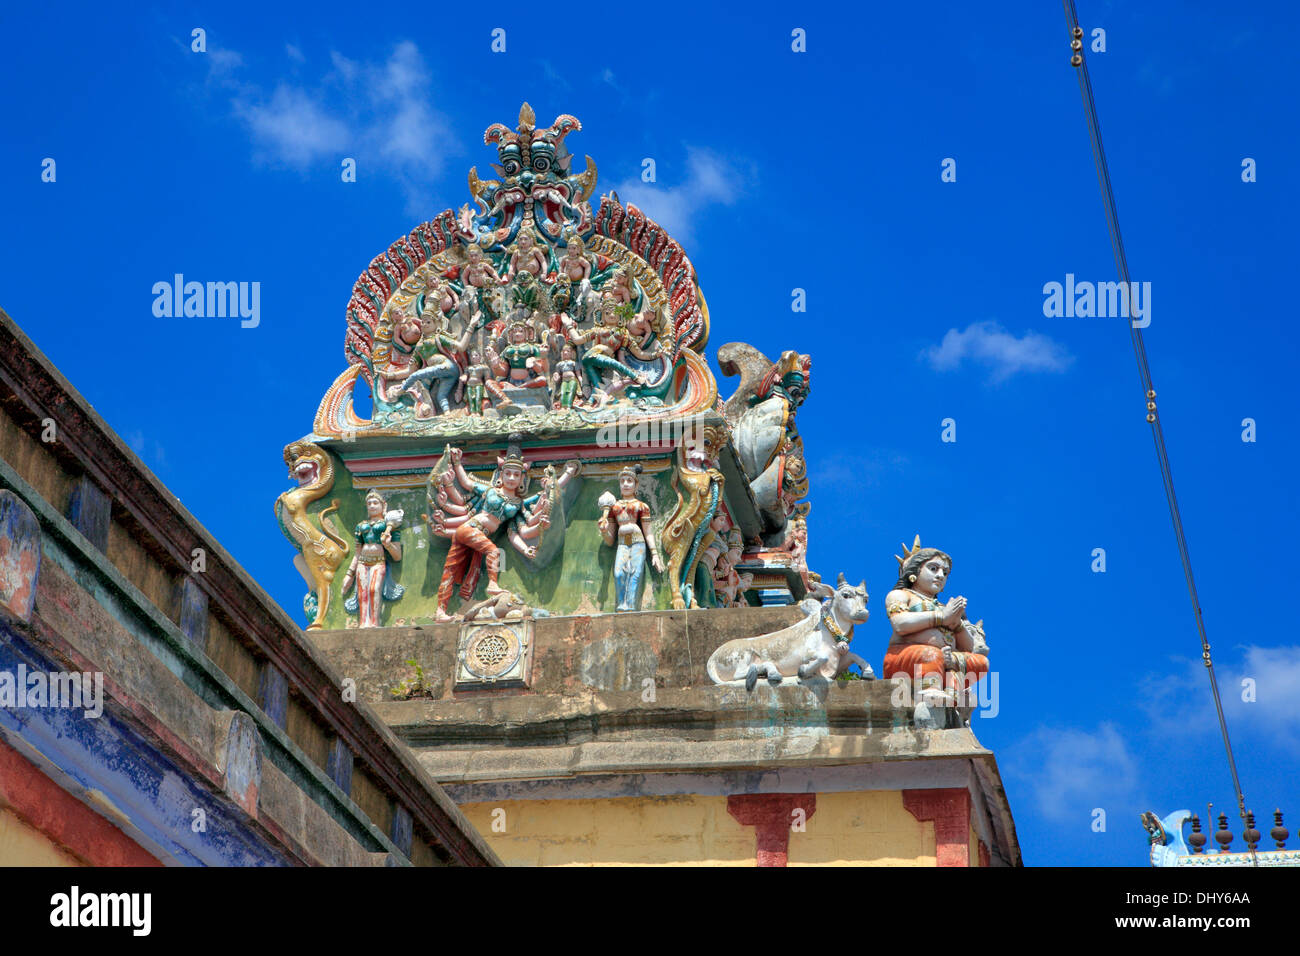 Nataraja temple (13th century), Chidambaram, Tamil Nadu, India Stock Photo